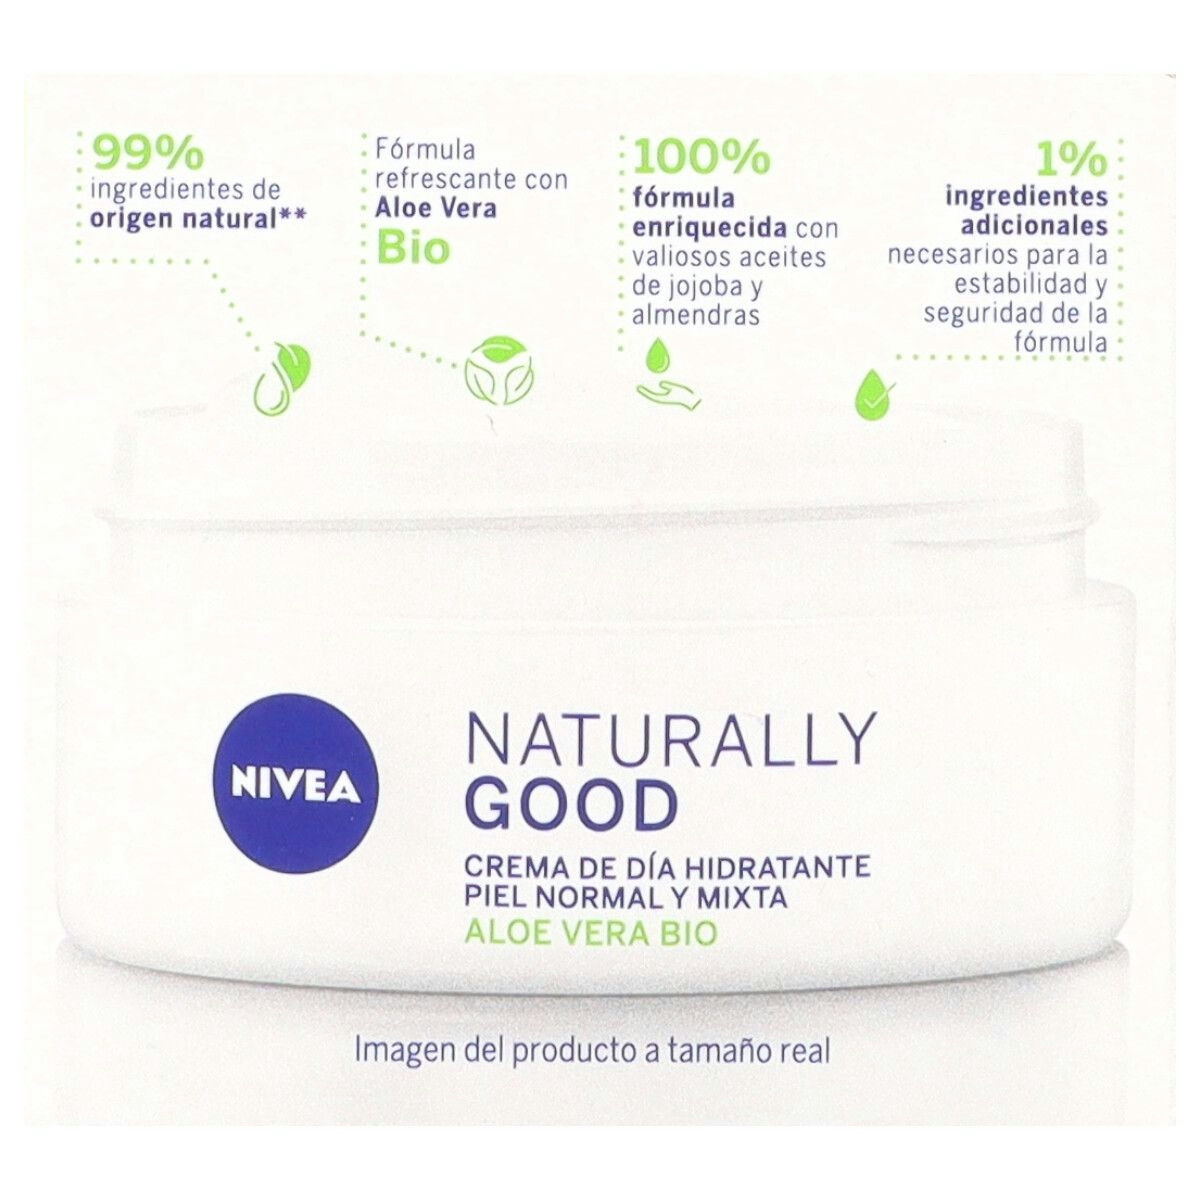 Crema hidratante Bio aloe vera NIVEA 50 ml